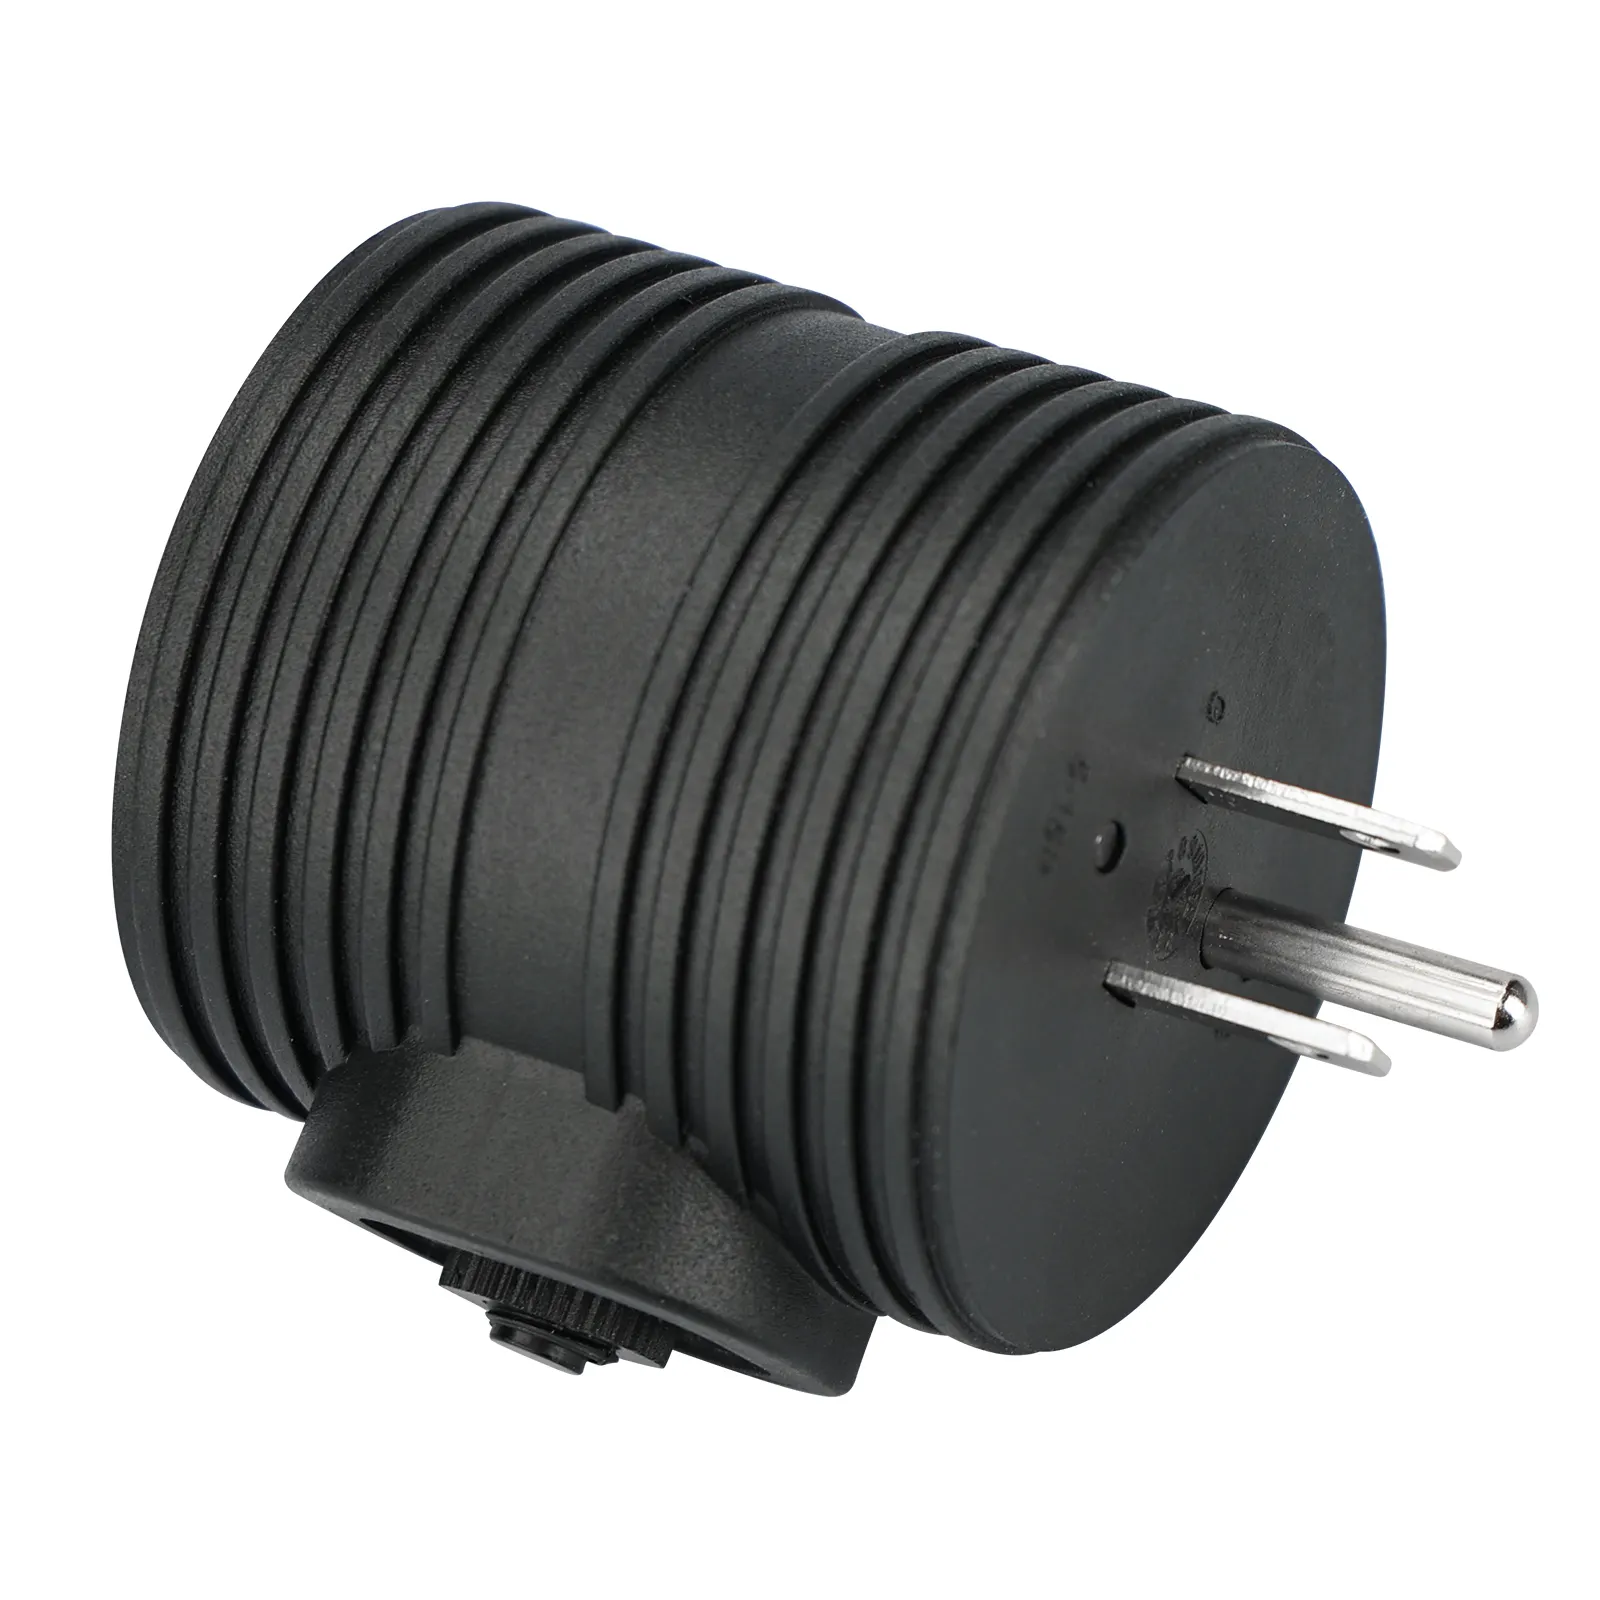 Enchufe adaptador de corriente NEMA 5-15P a RV con botón de reinicio, interruptor de Reinicio del convertidor de hoja recta 5-15P a TT-30R